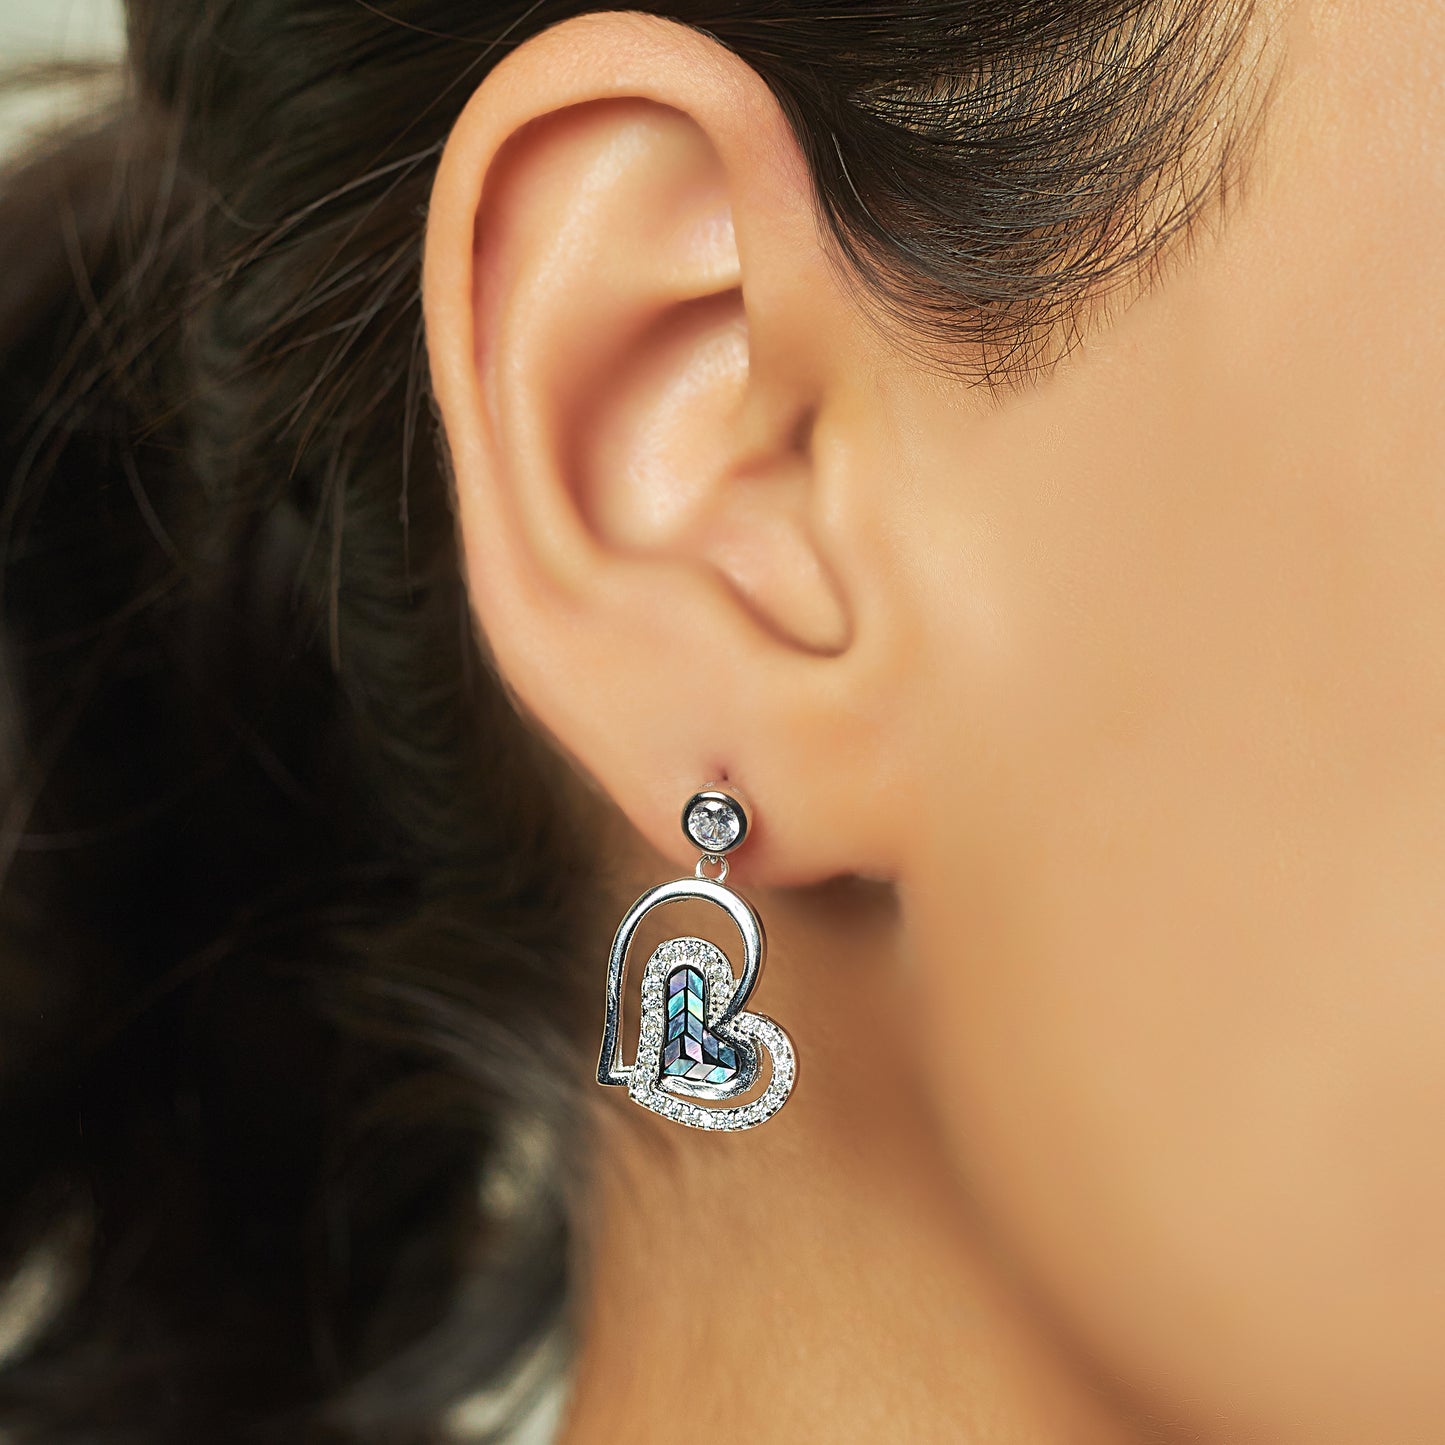 Silver Heart Shaped Pendant with Earrings Set